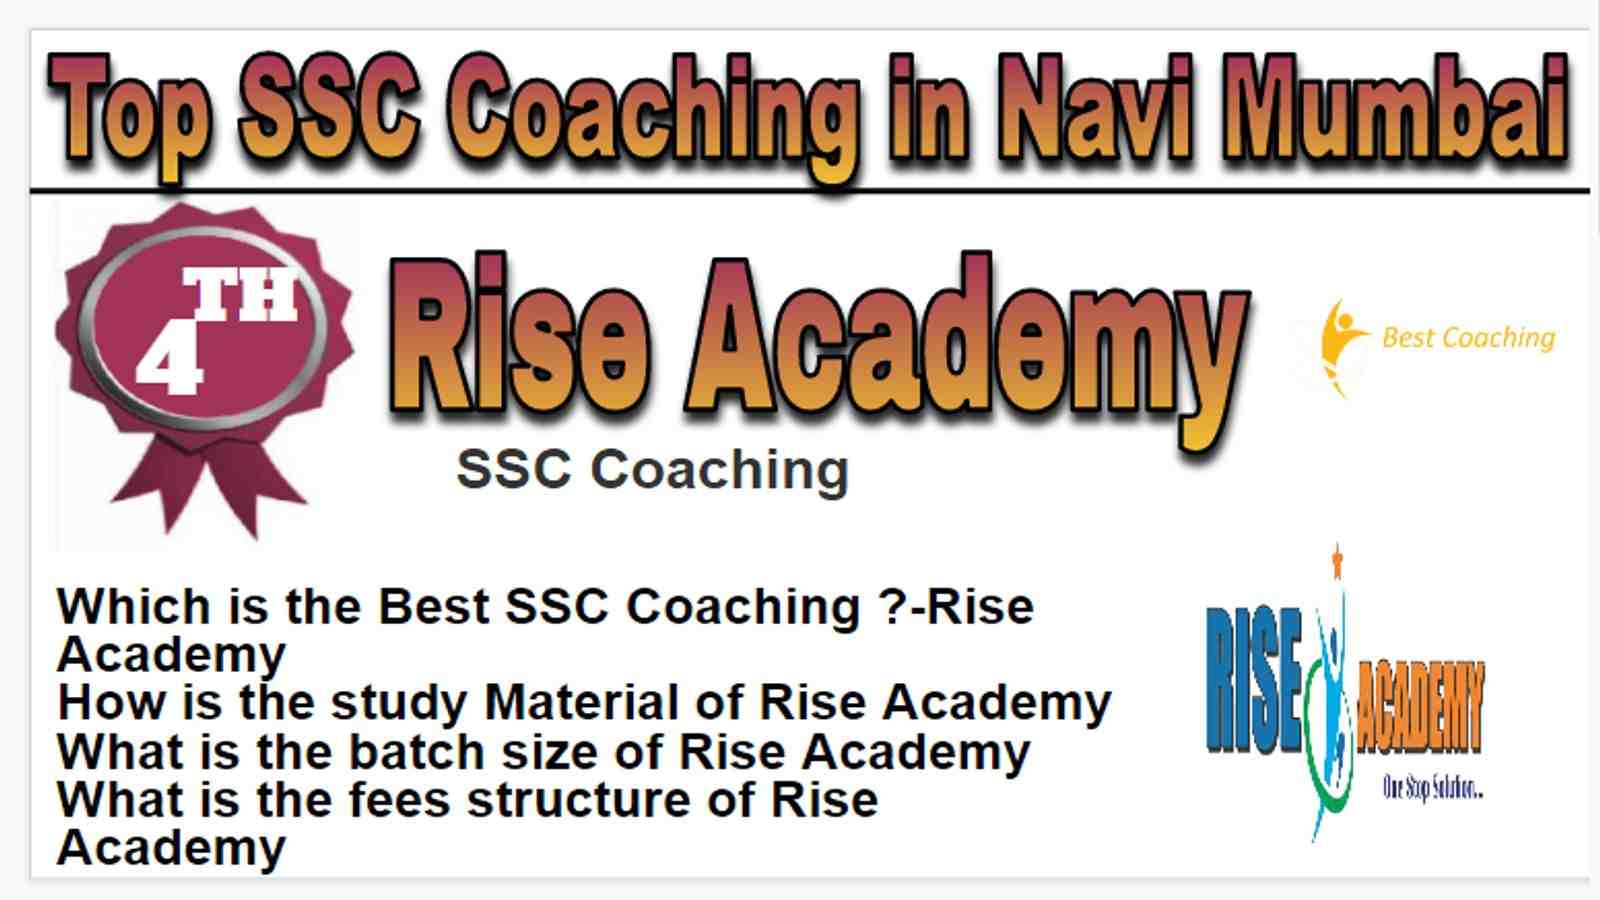 Rank 4 Best SSC Coaching in Navi Mumbai